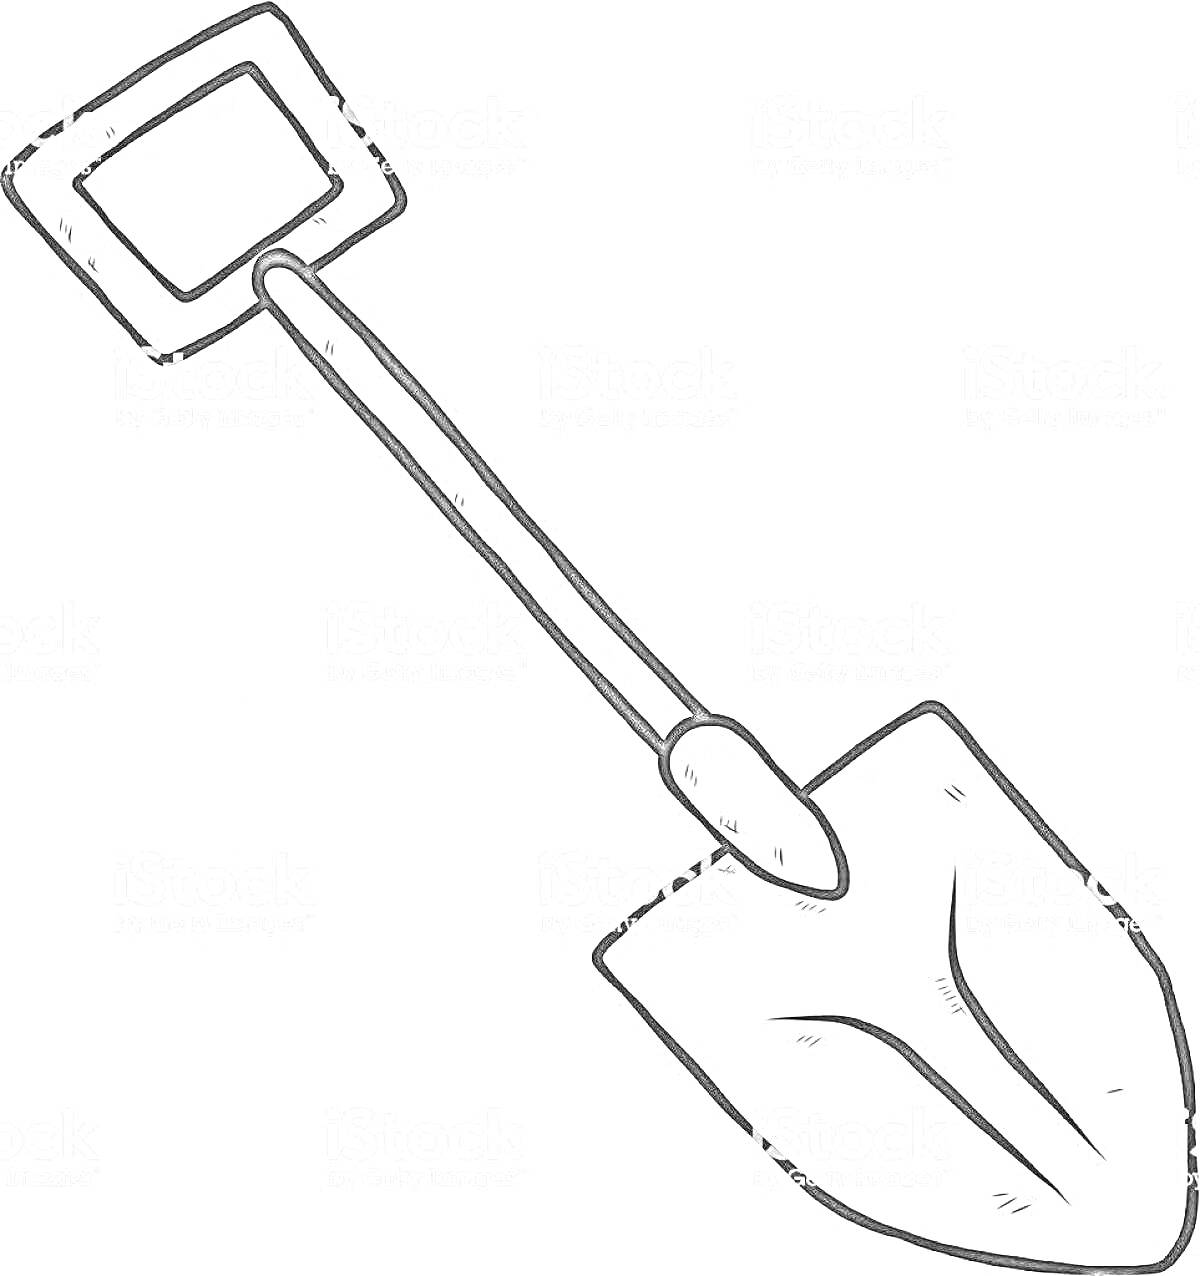 Раскраска Лопата с квадратной ручкой и лезвием